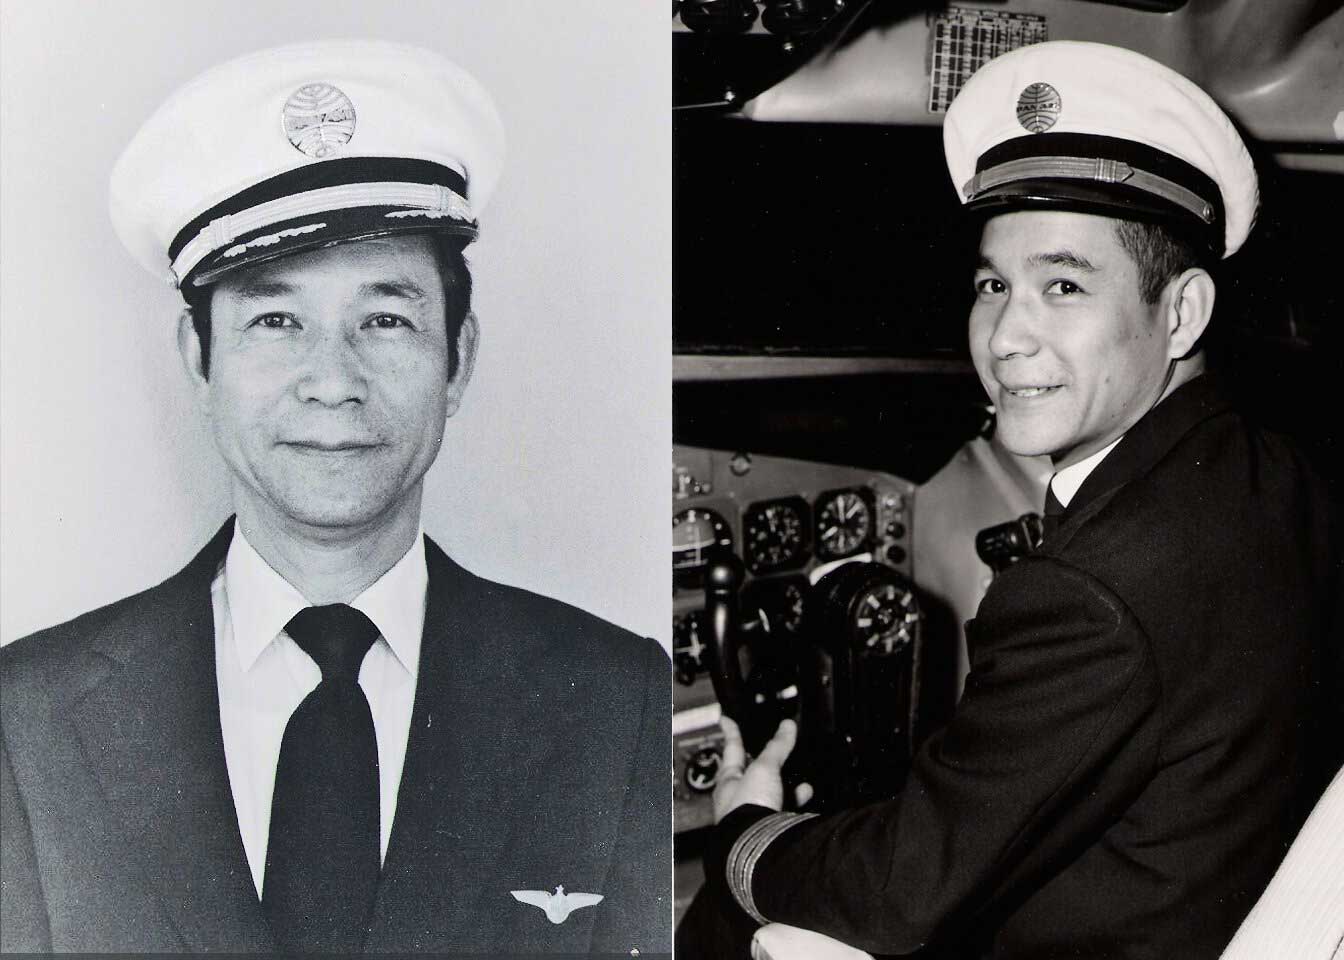 Ron won Pan Am Pilot in uniform